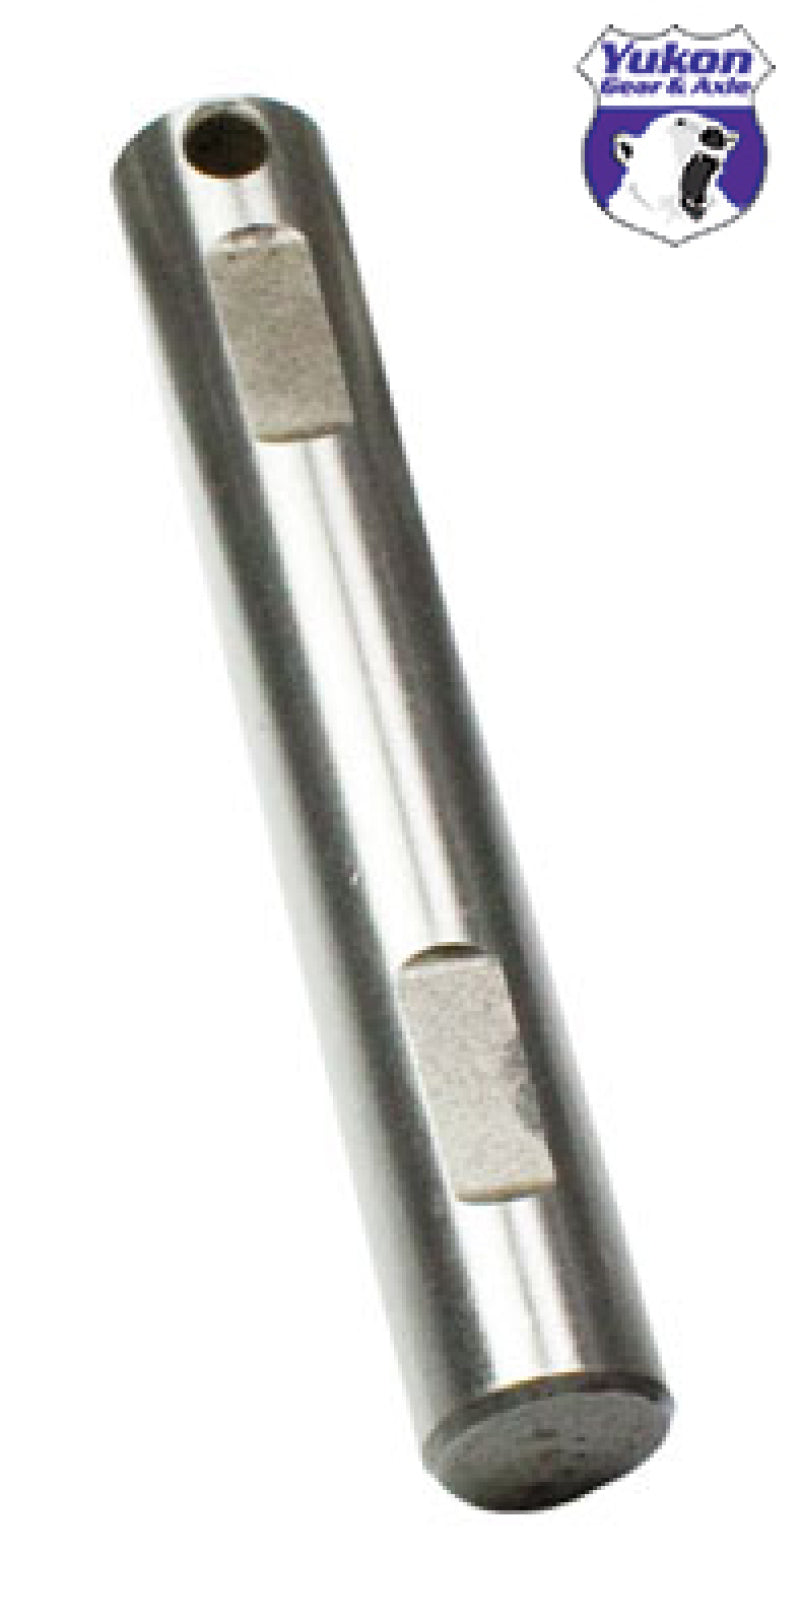 USA Standard Spartan Locker Samurai Spartan Locker Cross Pin Long